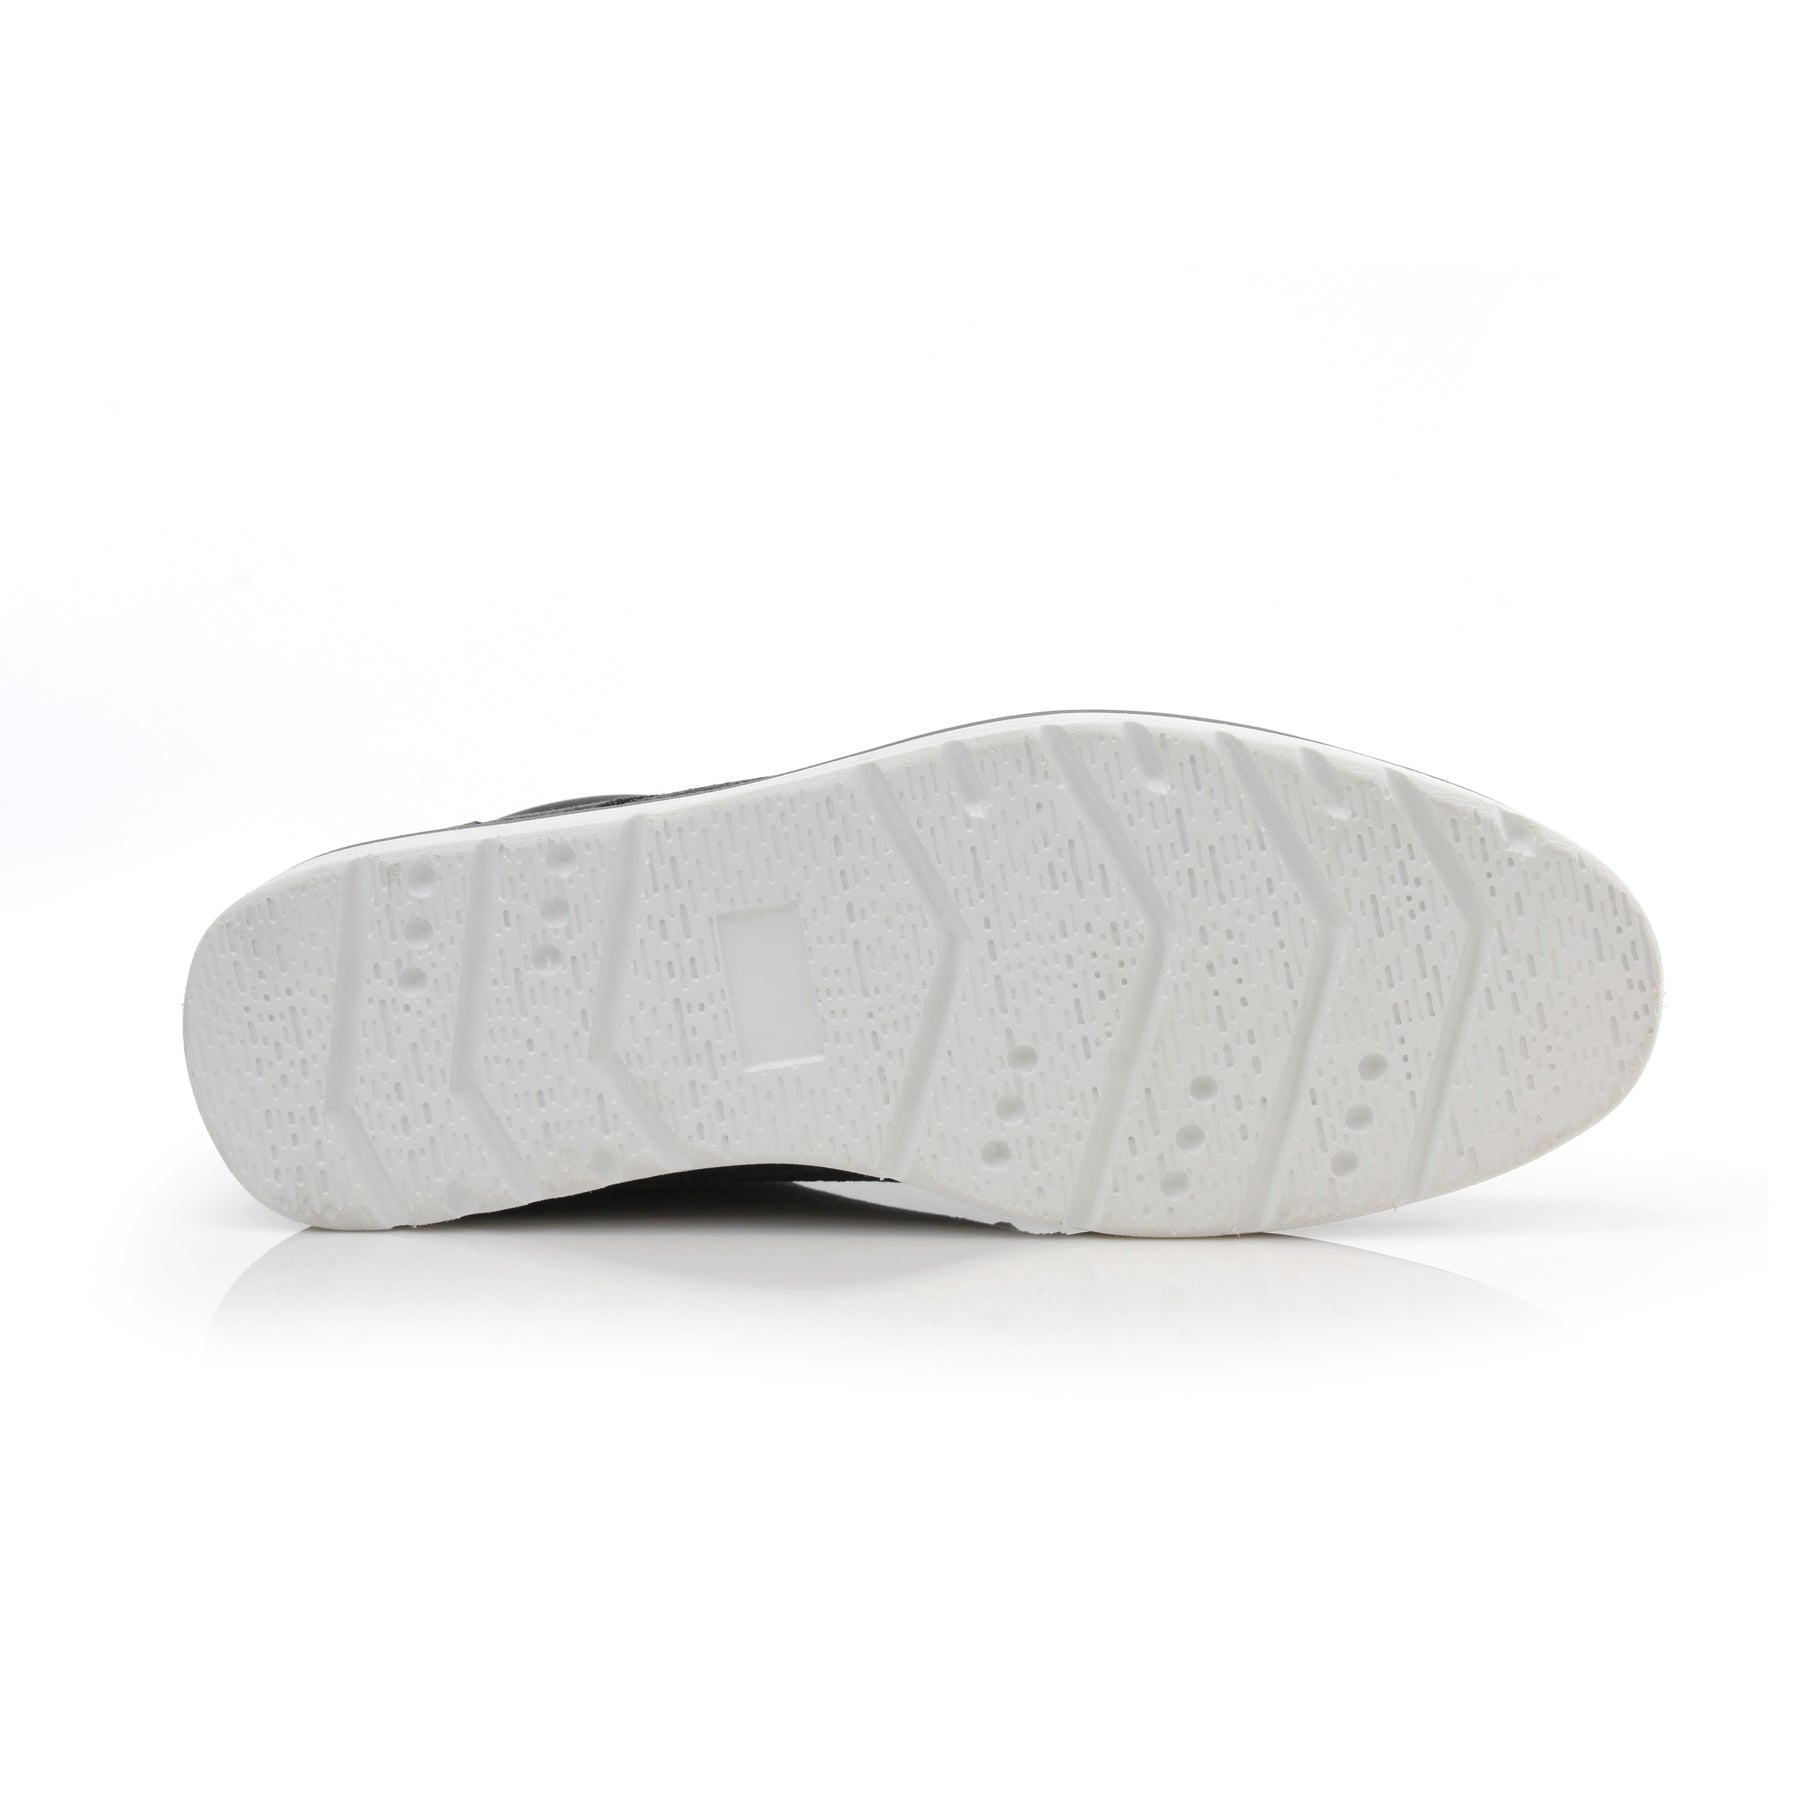 Denim Chukka Sneakers | Dustin by Polar Fox | Conal Footwear | Bottom Sole Angle View